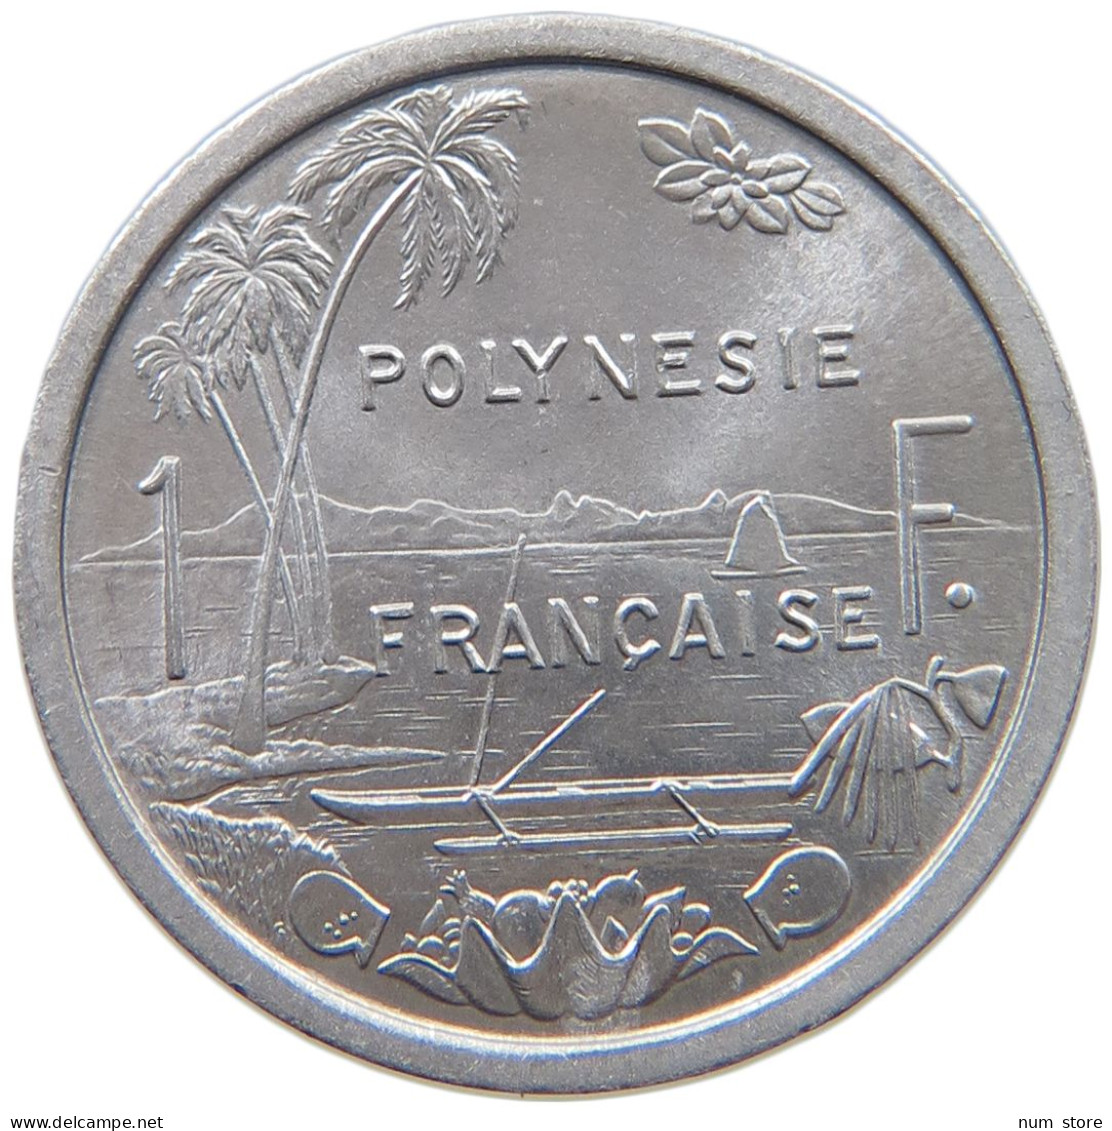 POLYNESIA FRANC 1965  #c035 0385 - Polynésie Française